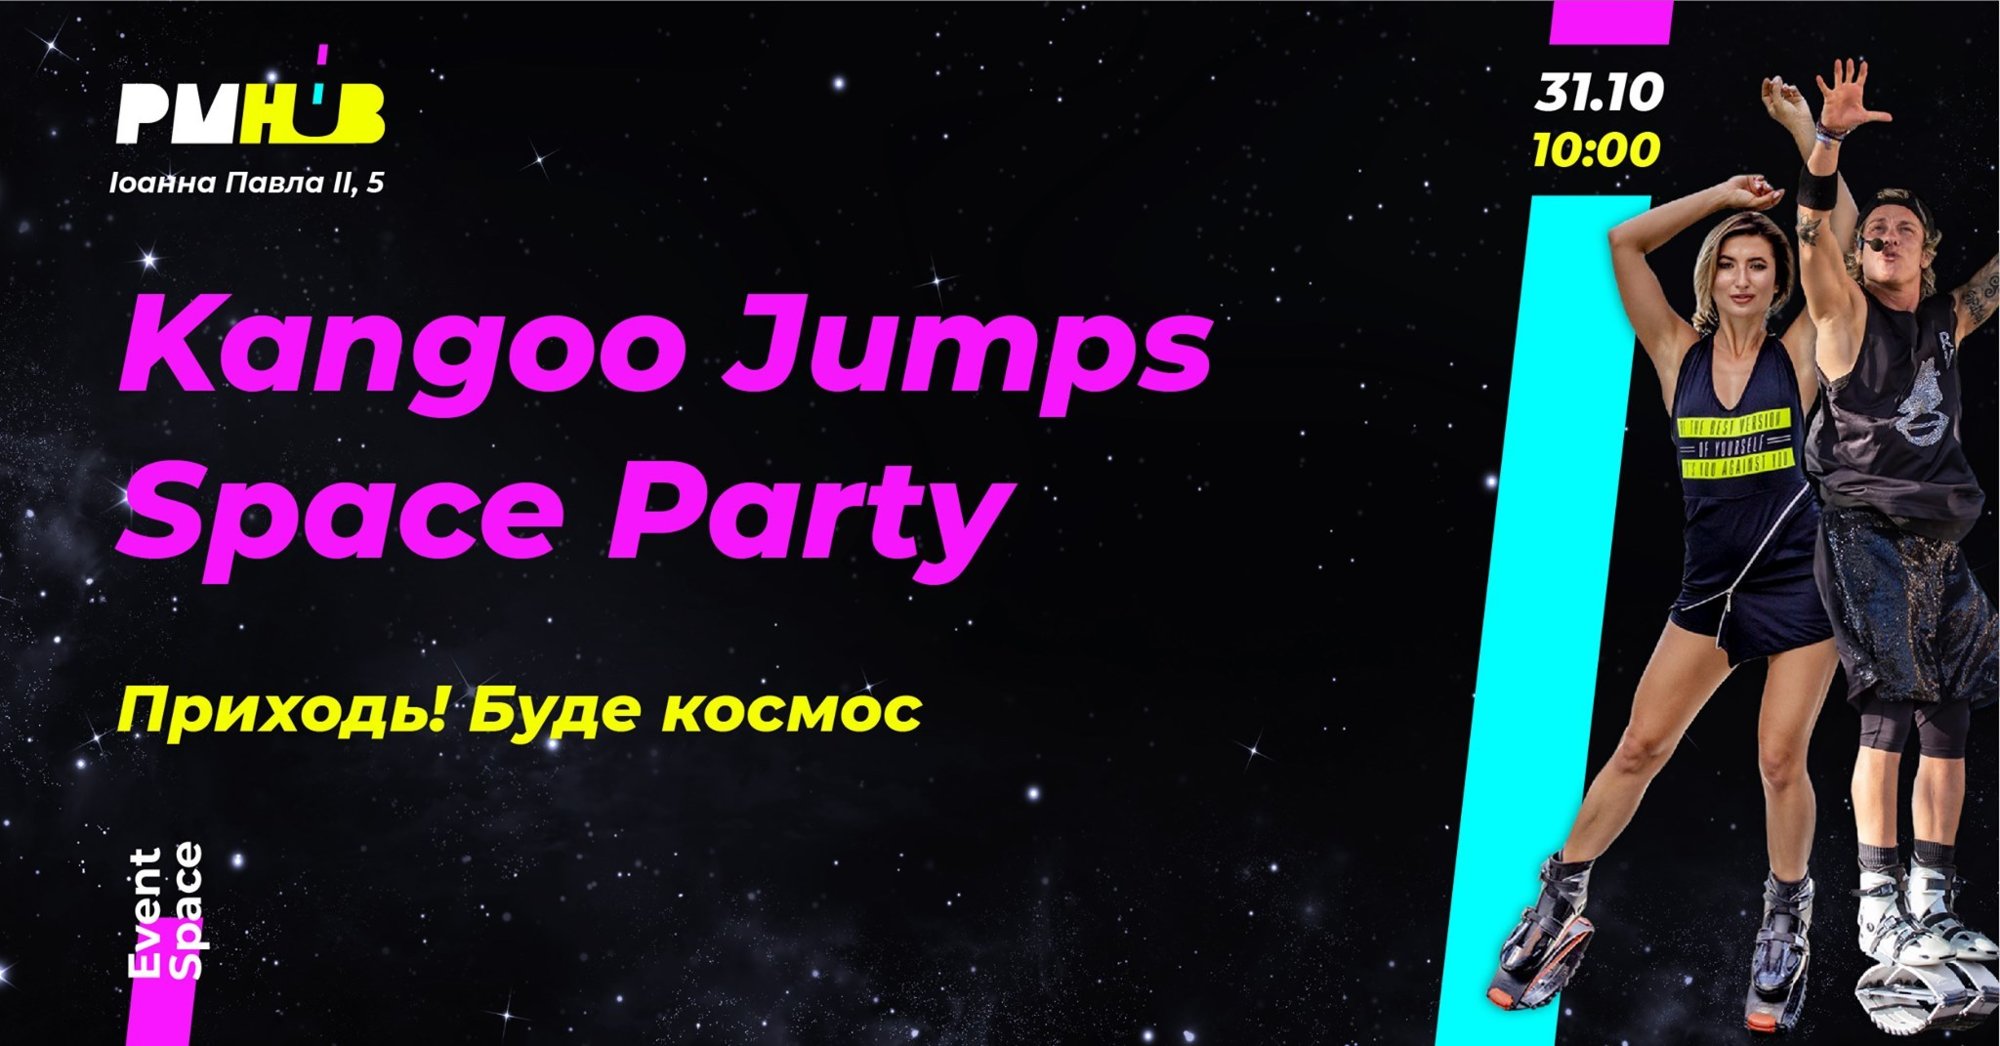 Kangoo Jumps Space Party/https://kyivmaps.com/